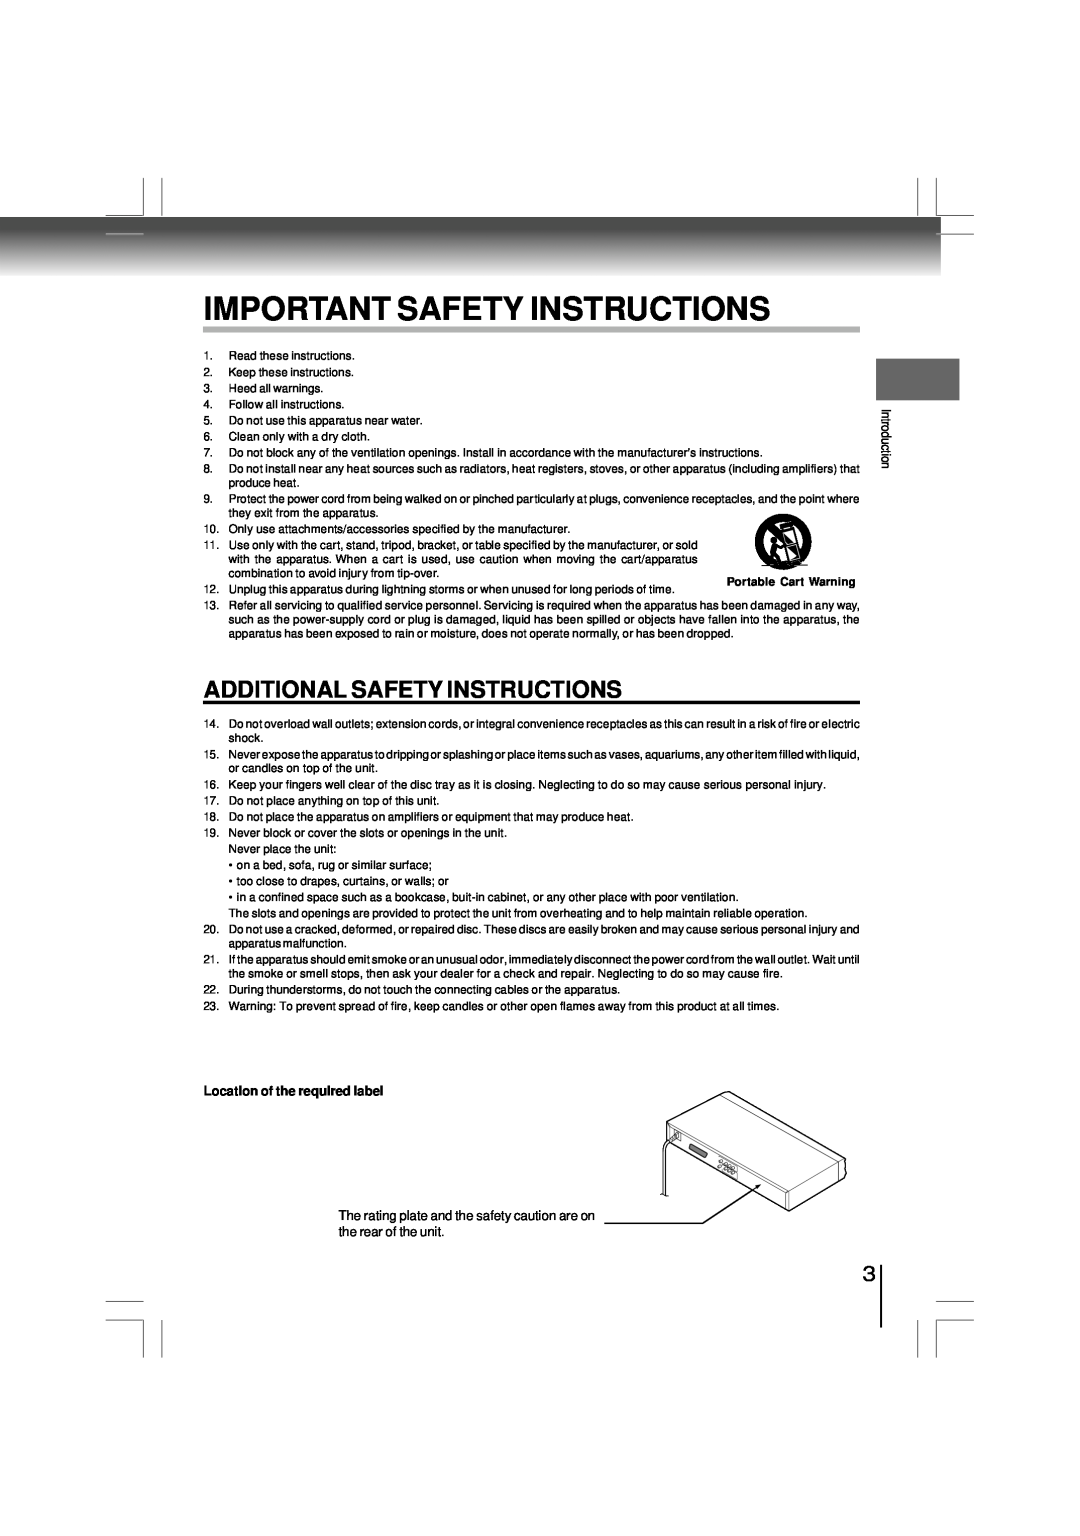 Toshiba SD-480EKE Important Safety Instructions, Additional Safety Instructions, Location of the required label 